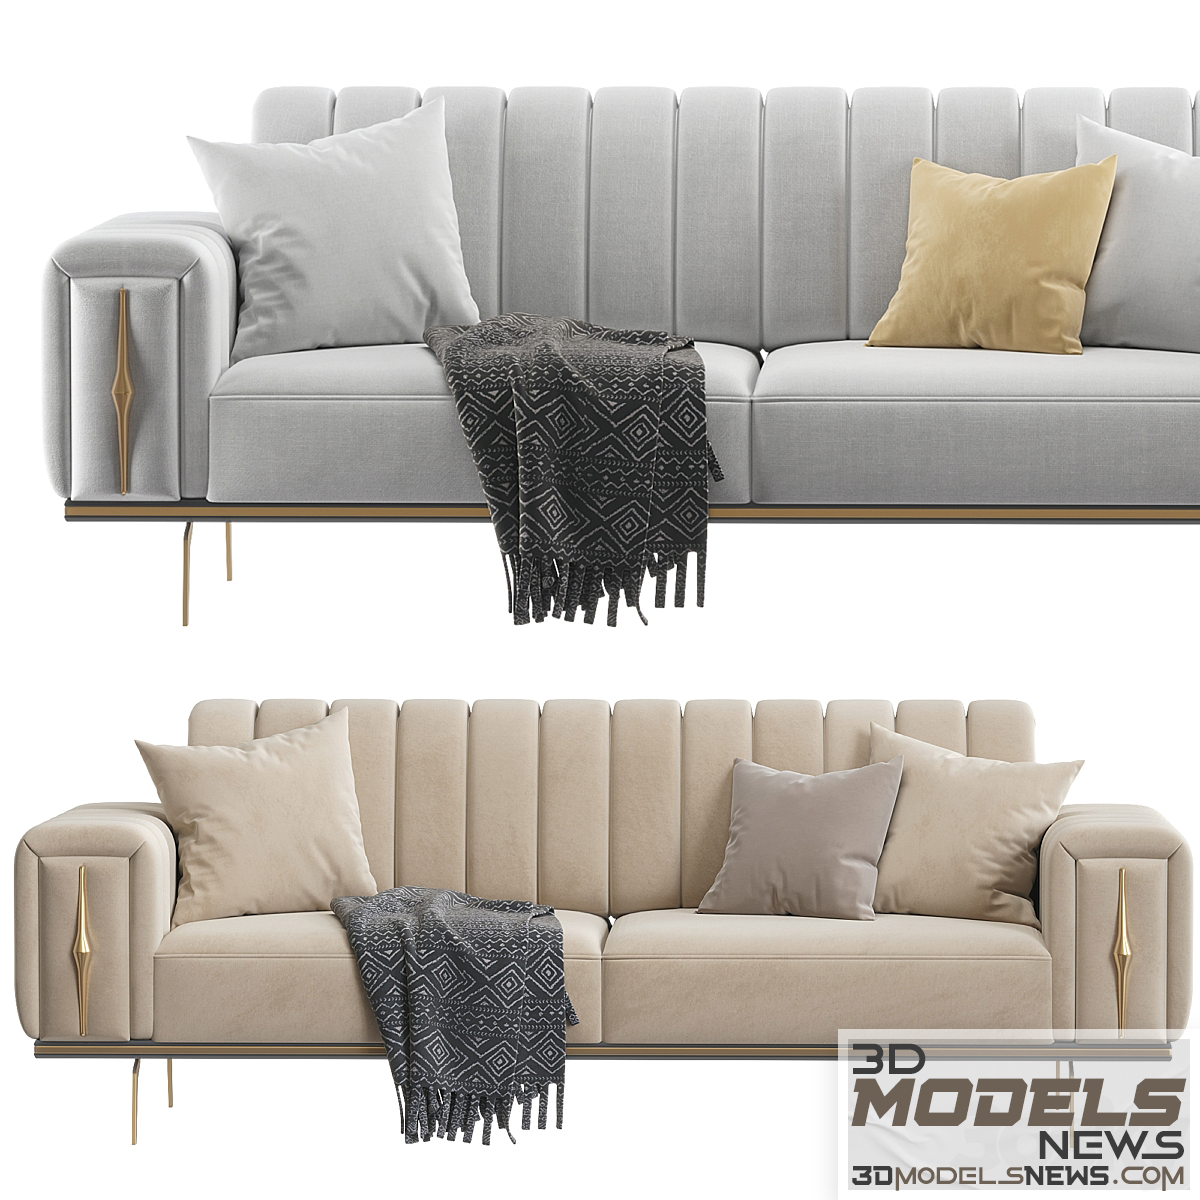 Natura split three seat sofa model 2